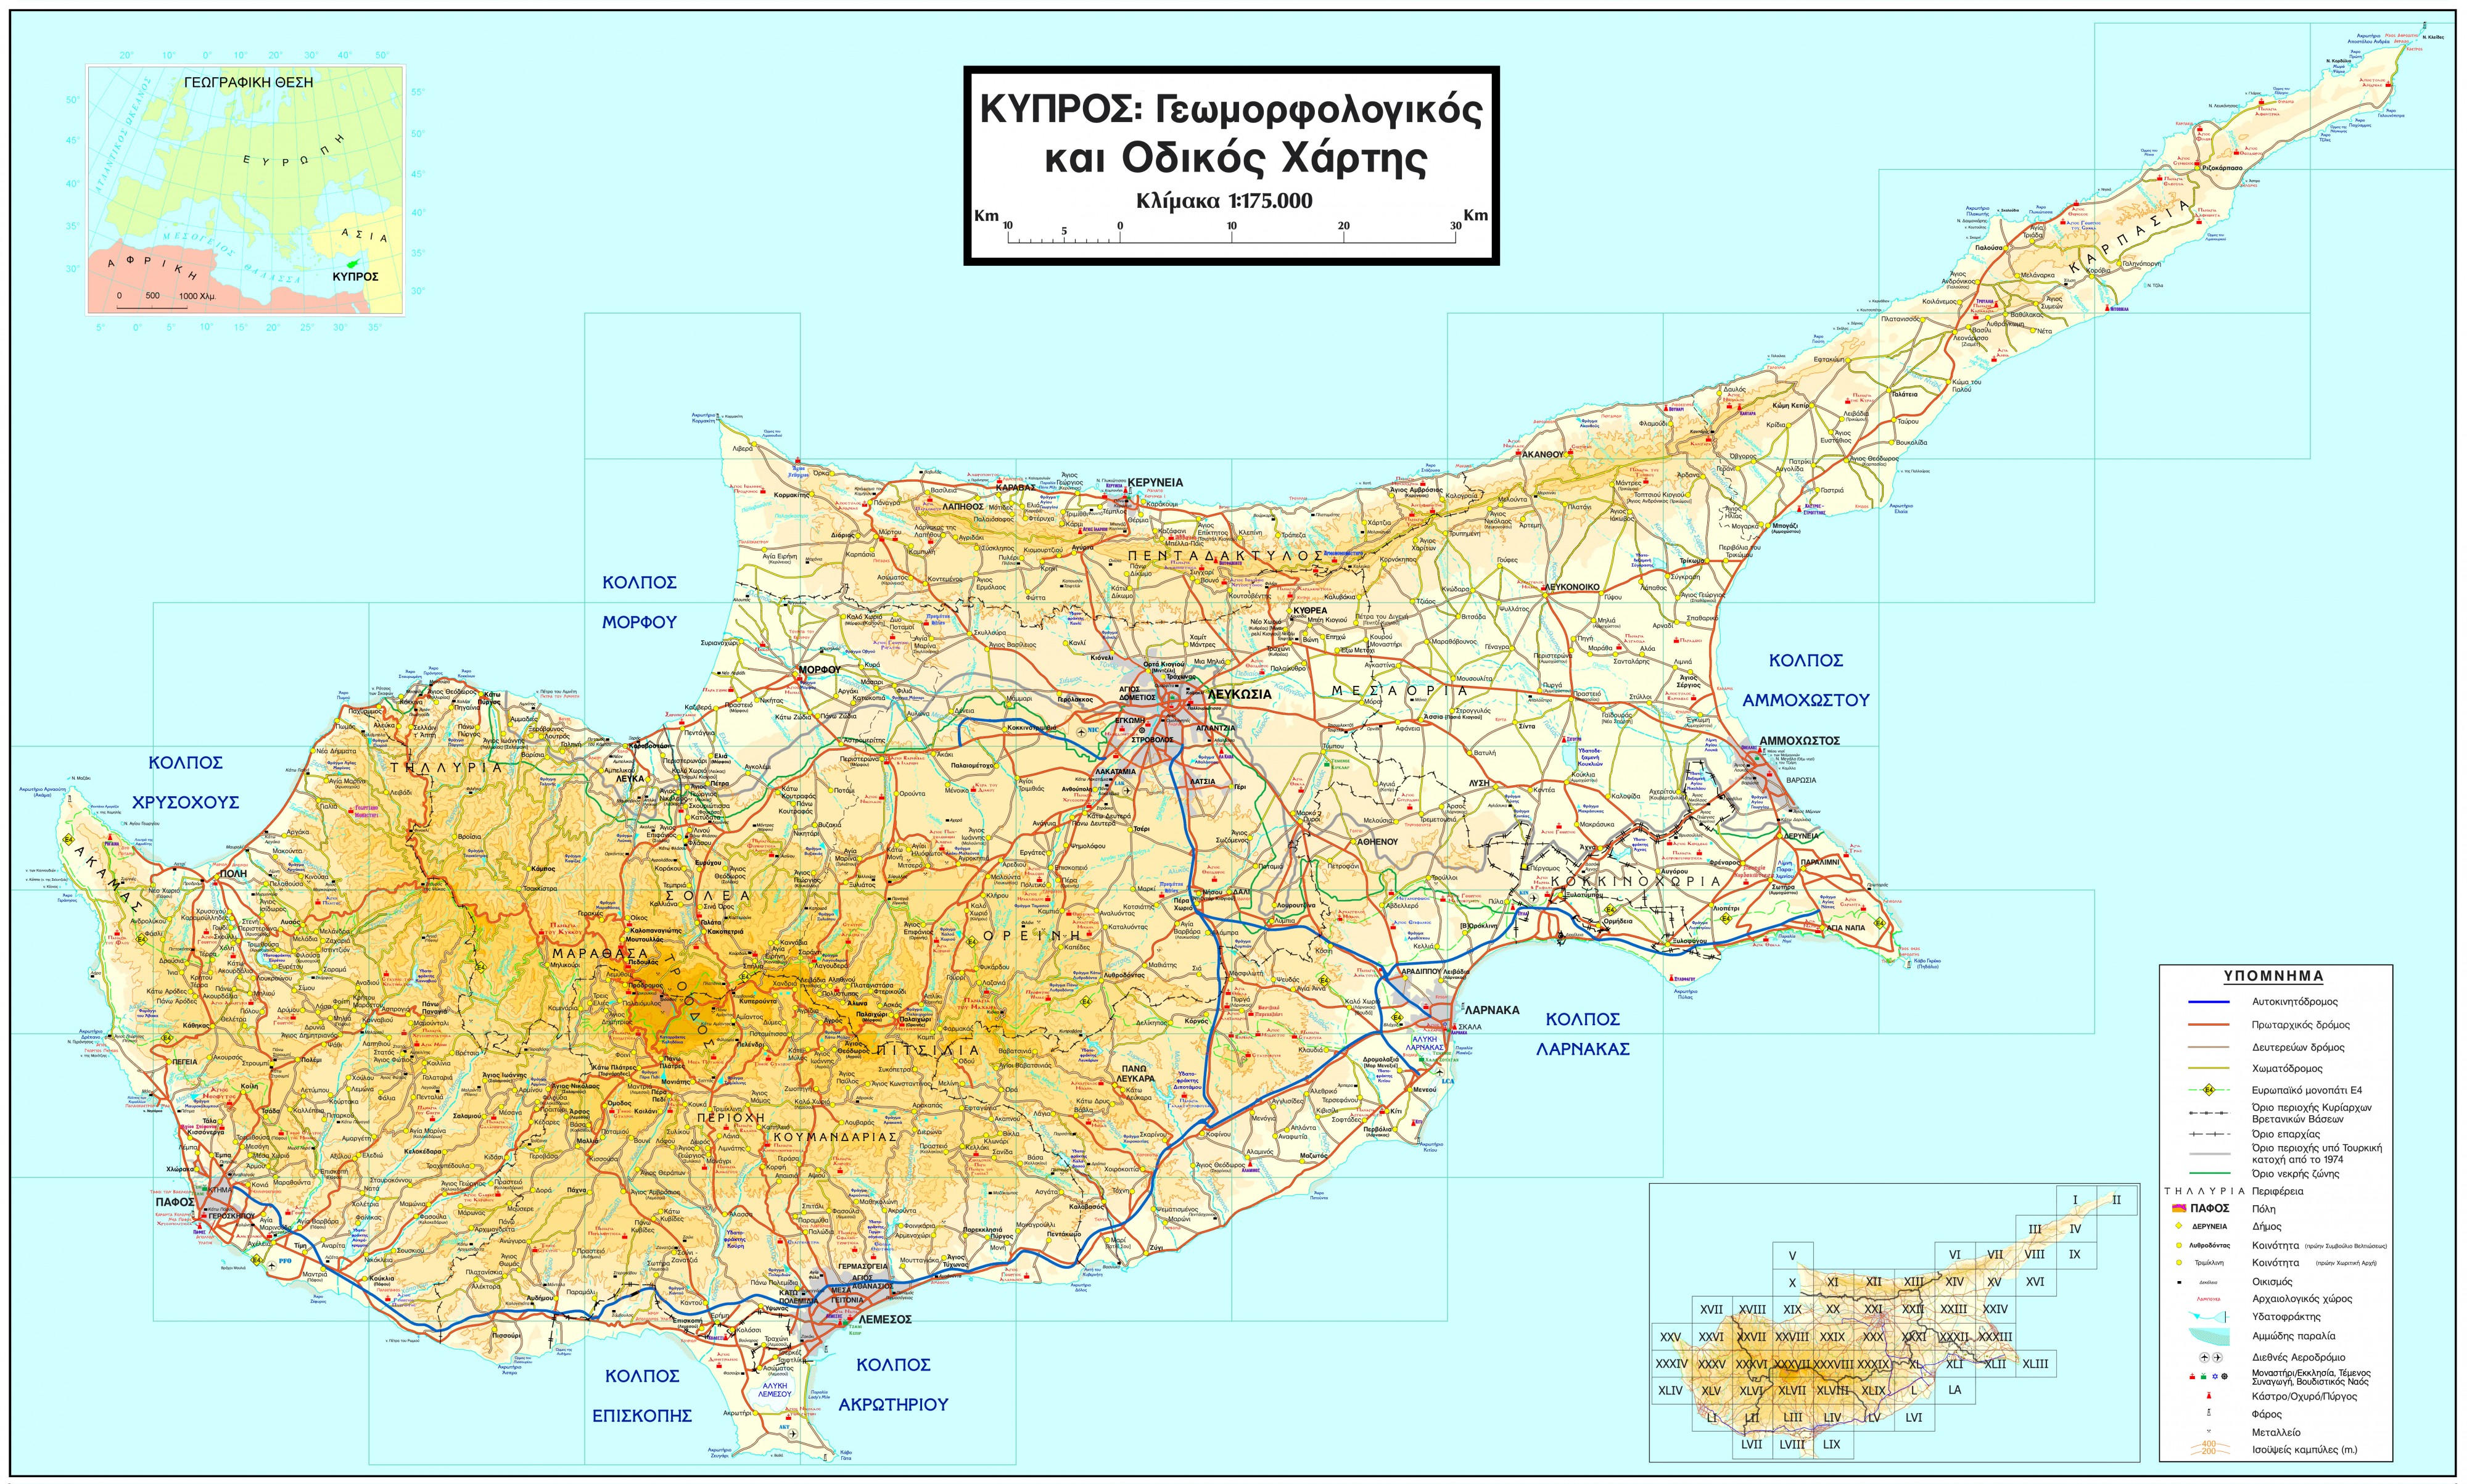 Cyprus geomorphologic